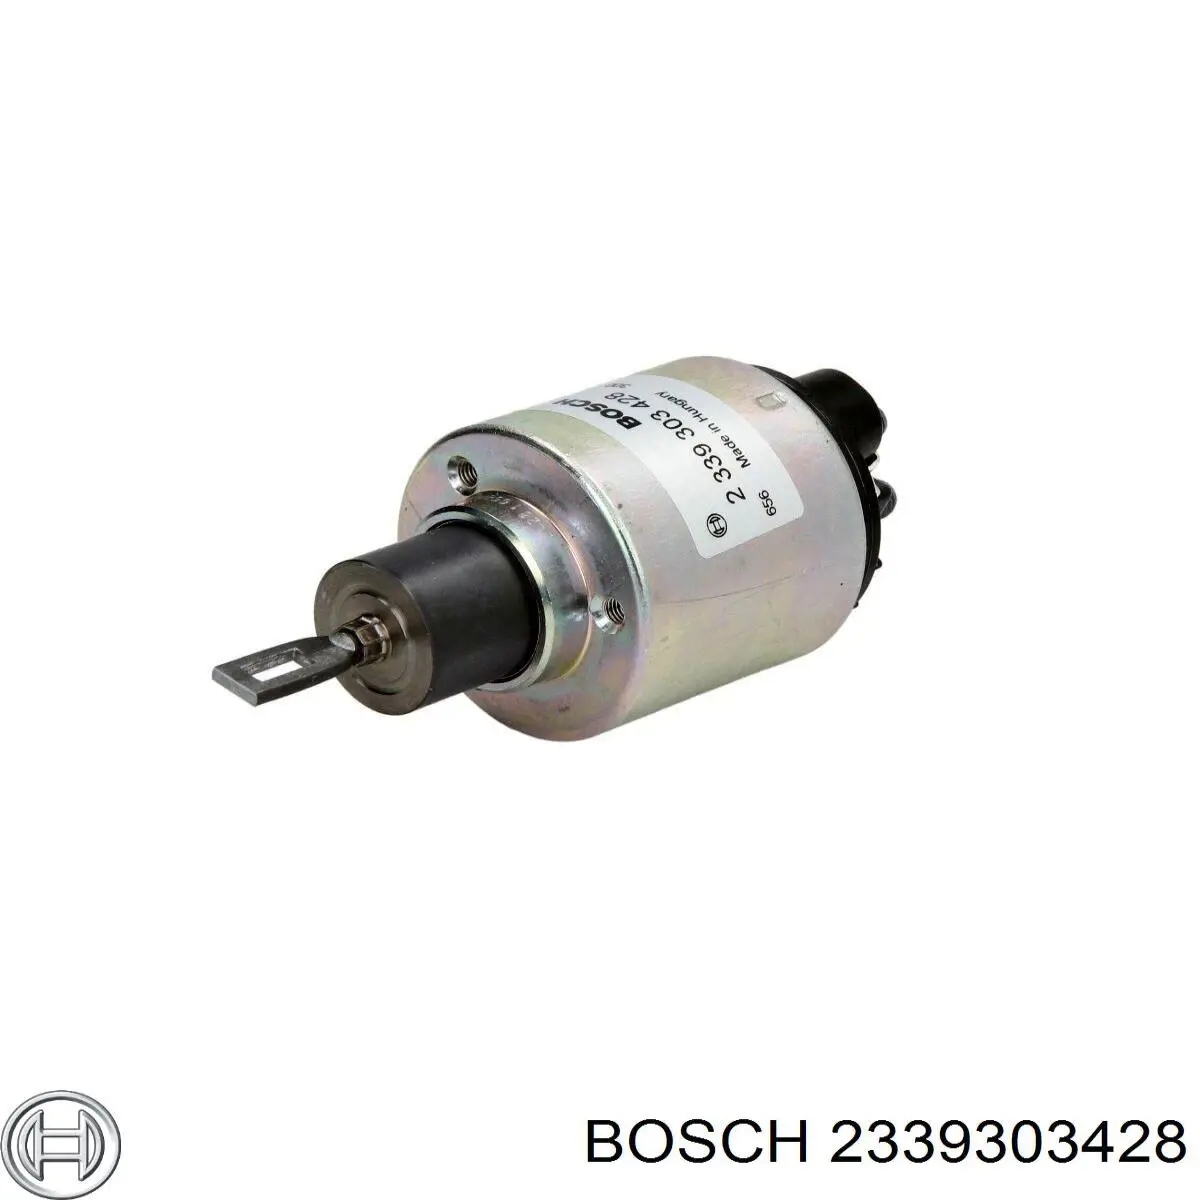 2339303428 Bosch interruptor magnético, estárter